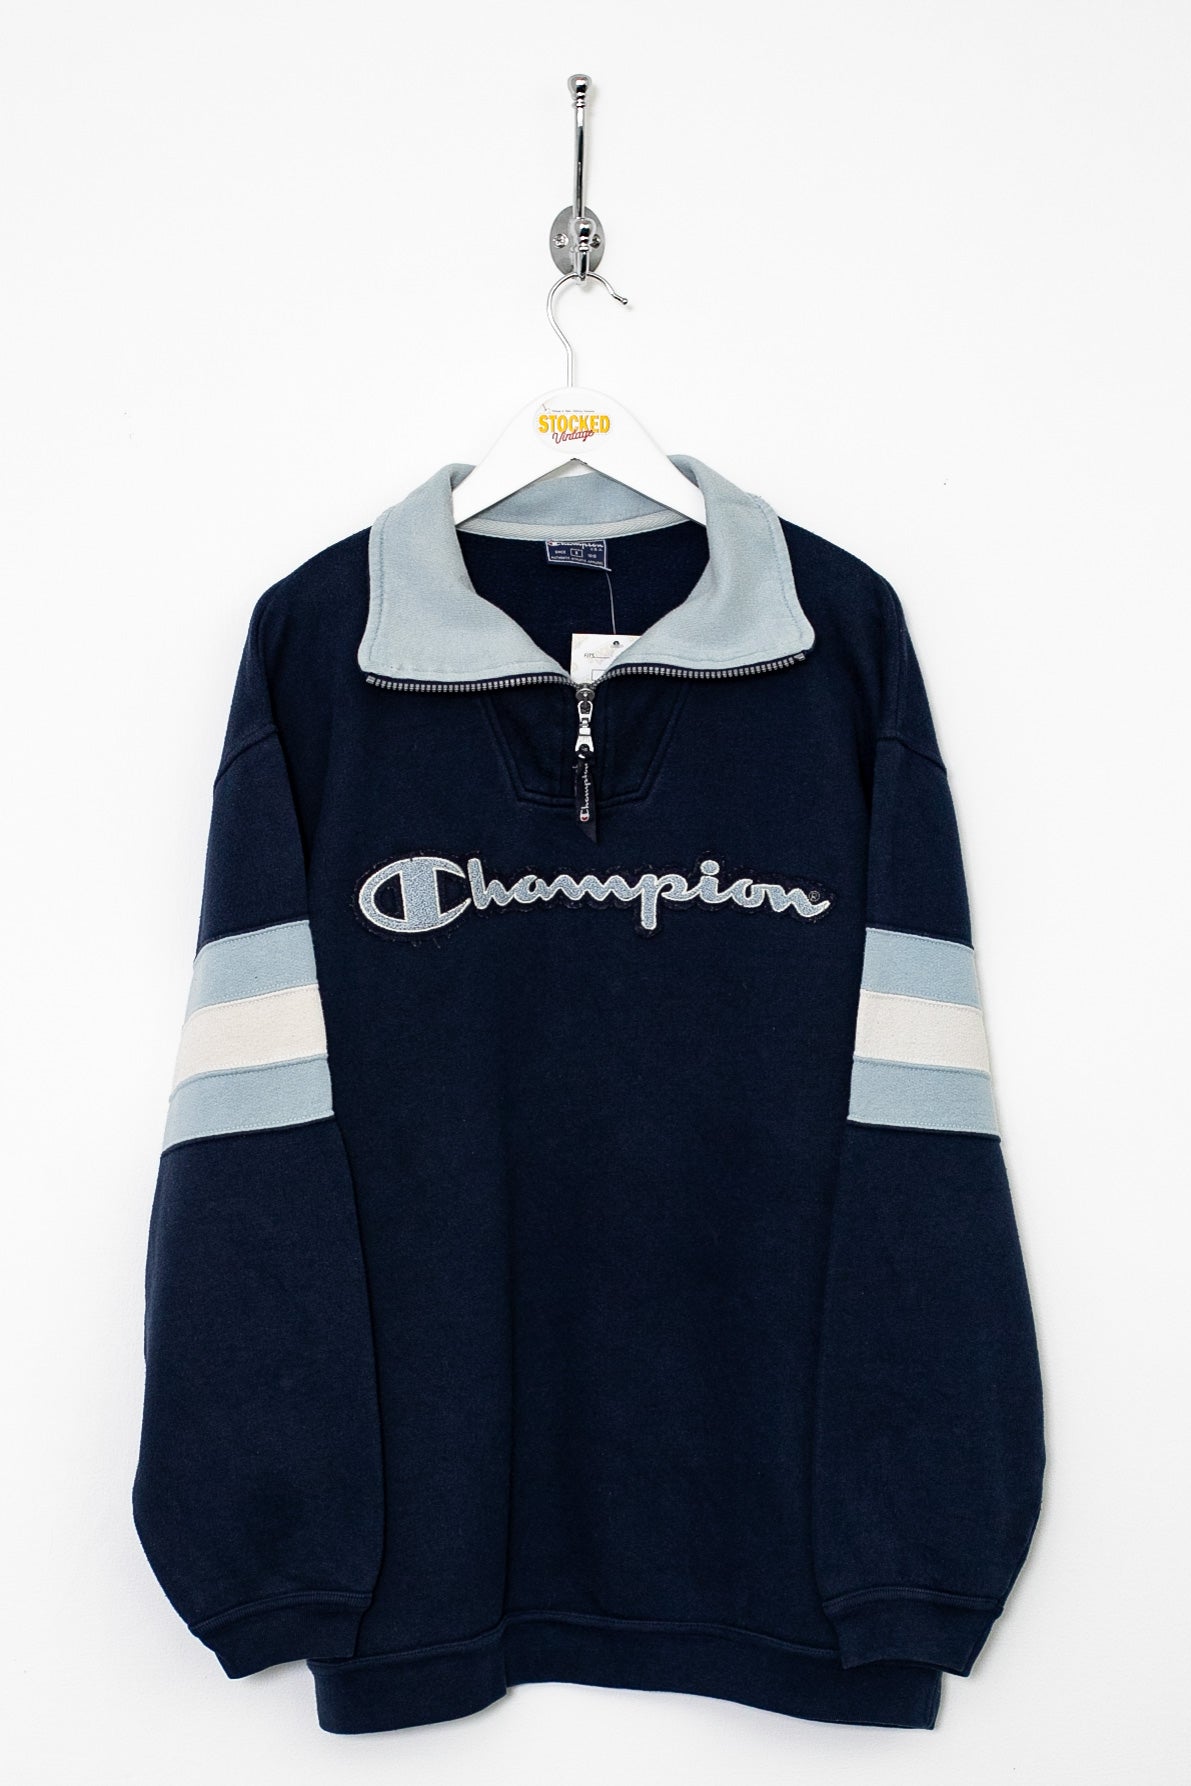 (S) – Stocked Vintage Sweatshirt 1/4 Champion 00s Zip